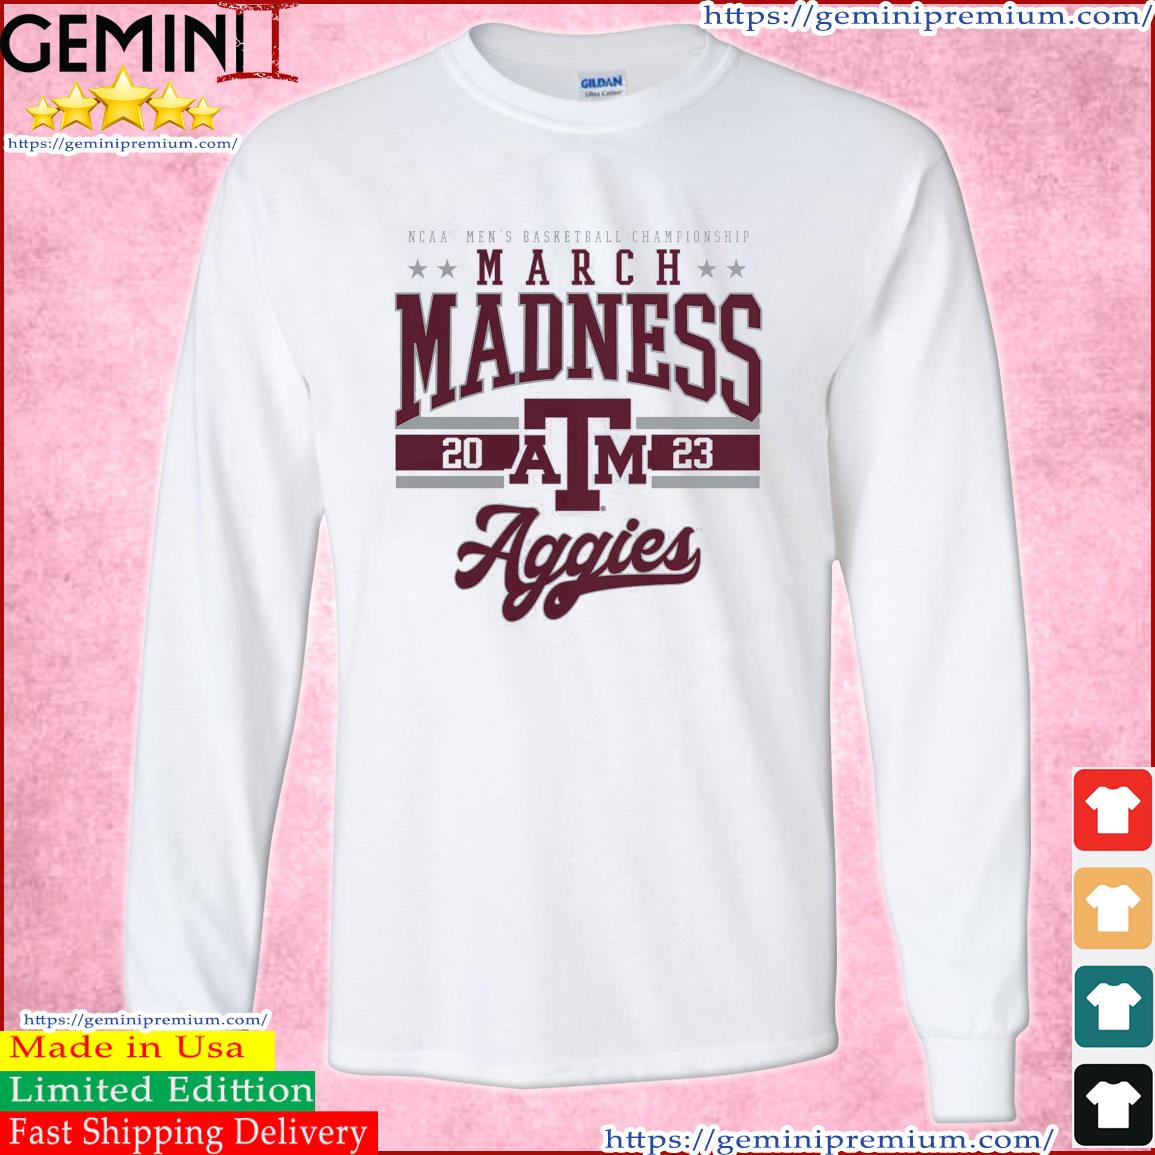 Texas A&M Aggies NCAA Men's Basketball Tournament March Madness 2023 Shirt Long Sleeve Tee